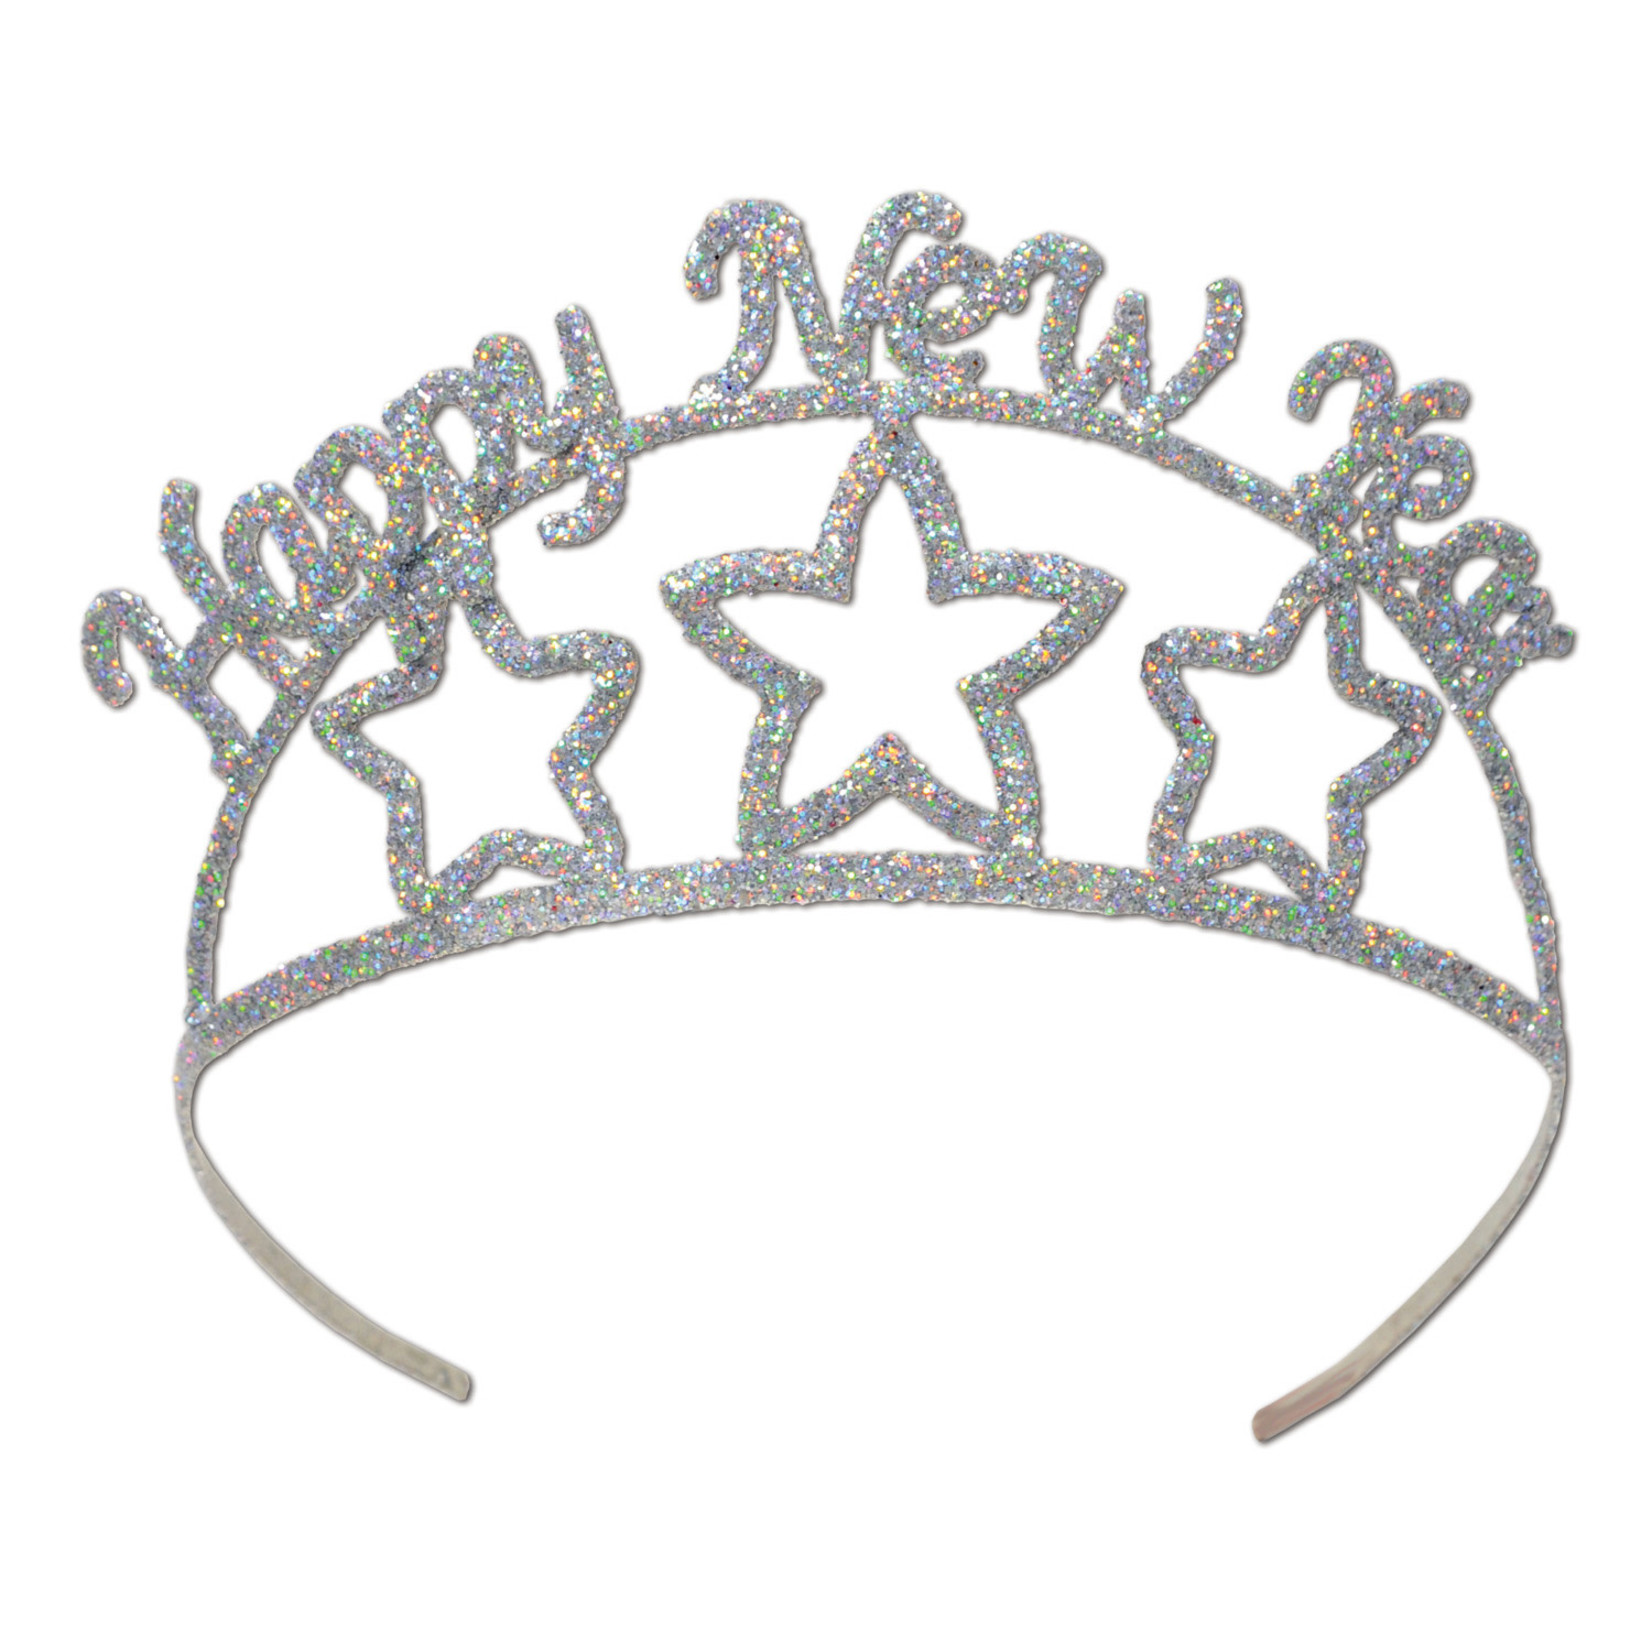 Beistle Silver Happy New Year Glittered Metal Tiara - 1ct.